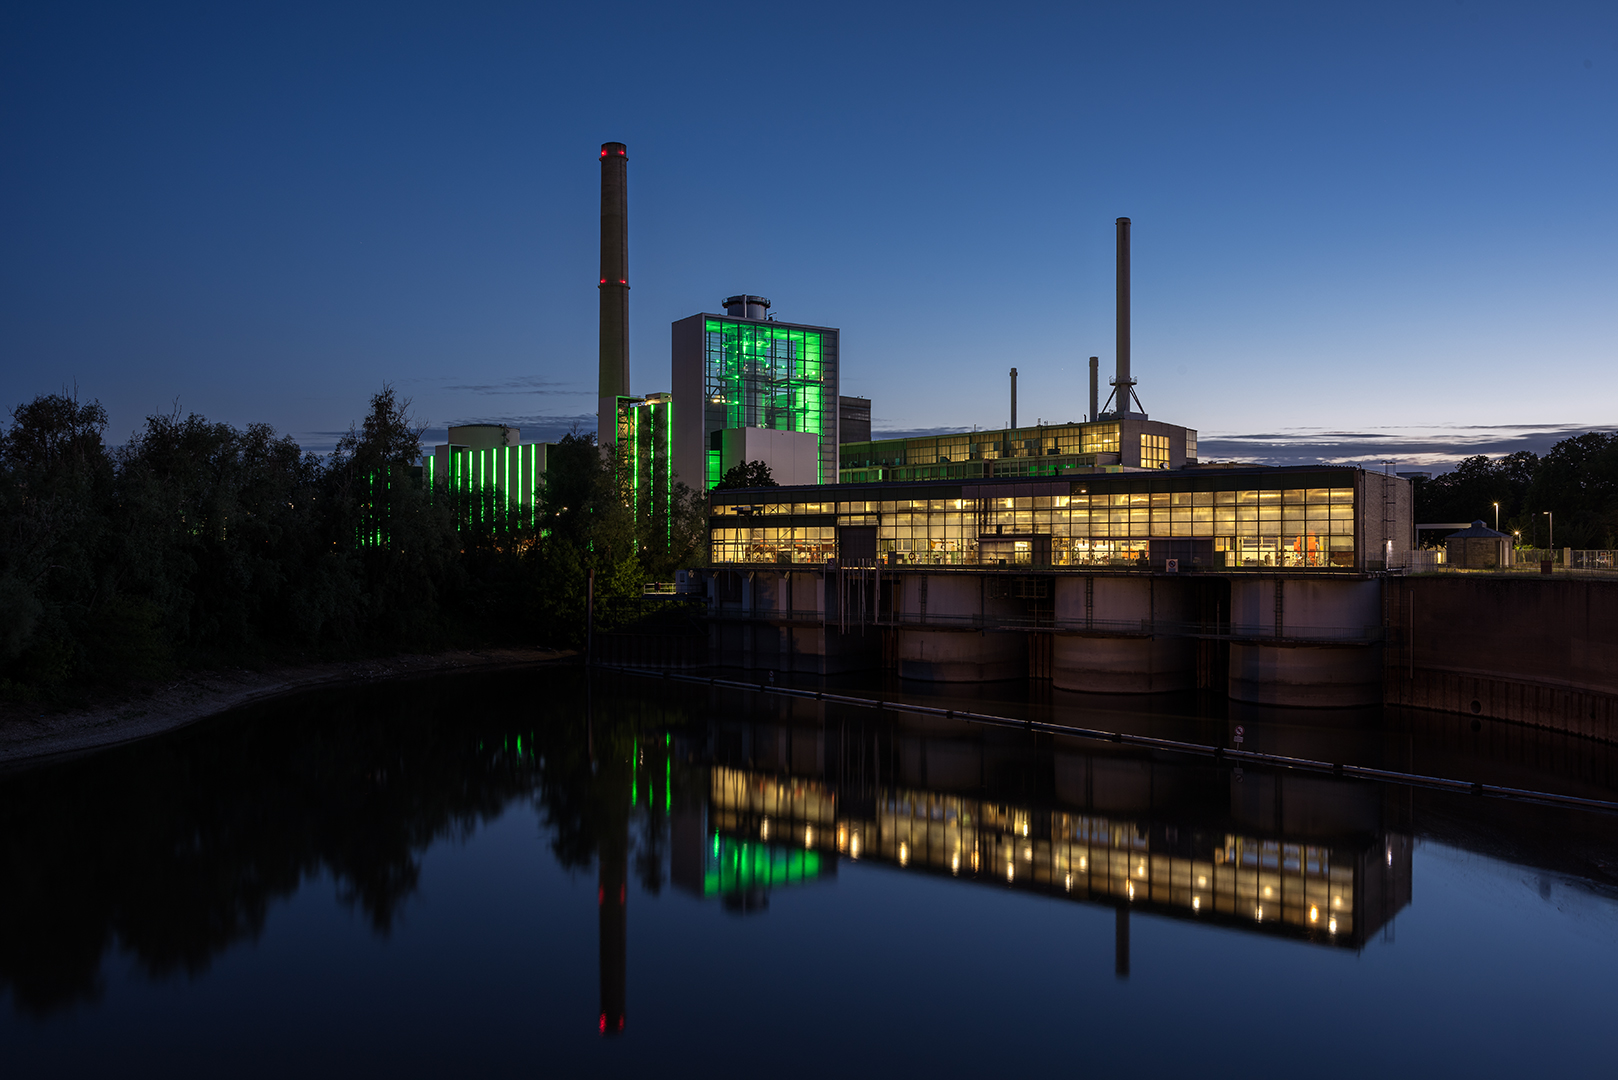 Kraftwerk Lausward Düsseldorf